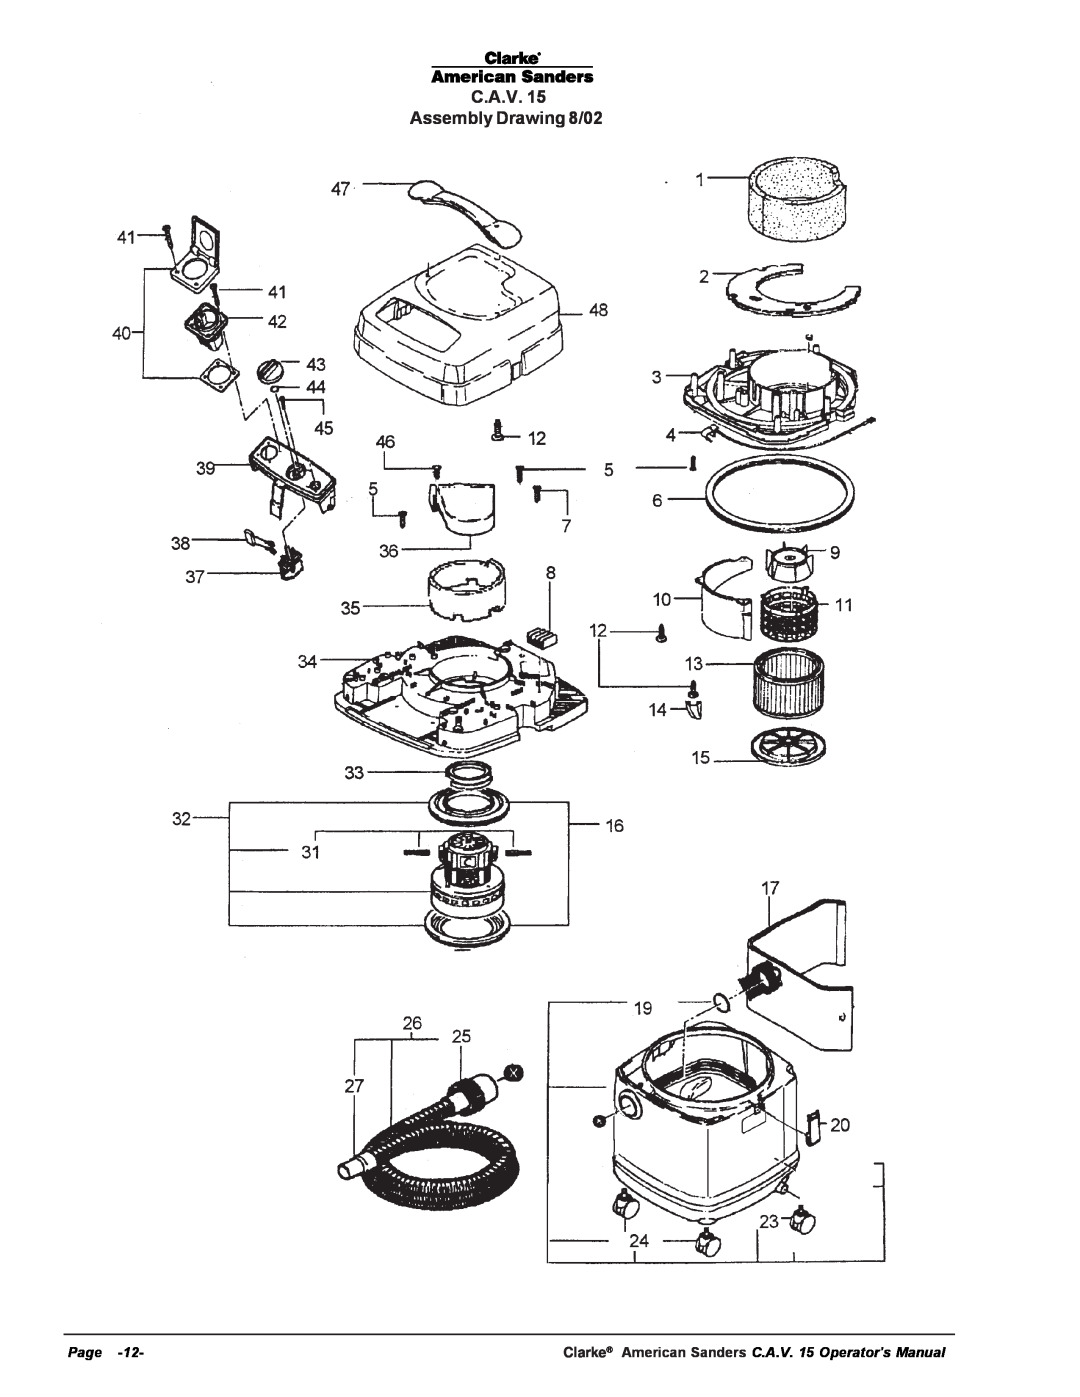 Nilfisk-ALTO C.A.V. 15 manual C.A.V. Assembly Drawing 8/02, Page 